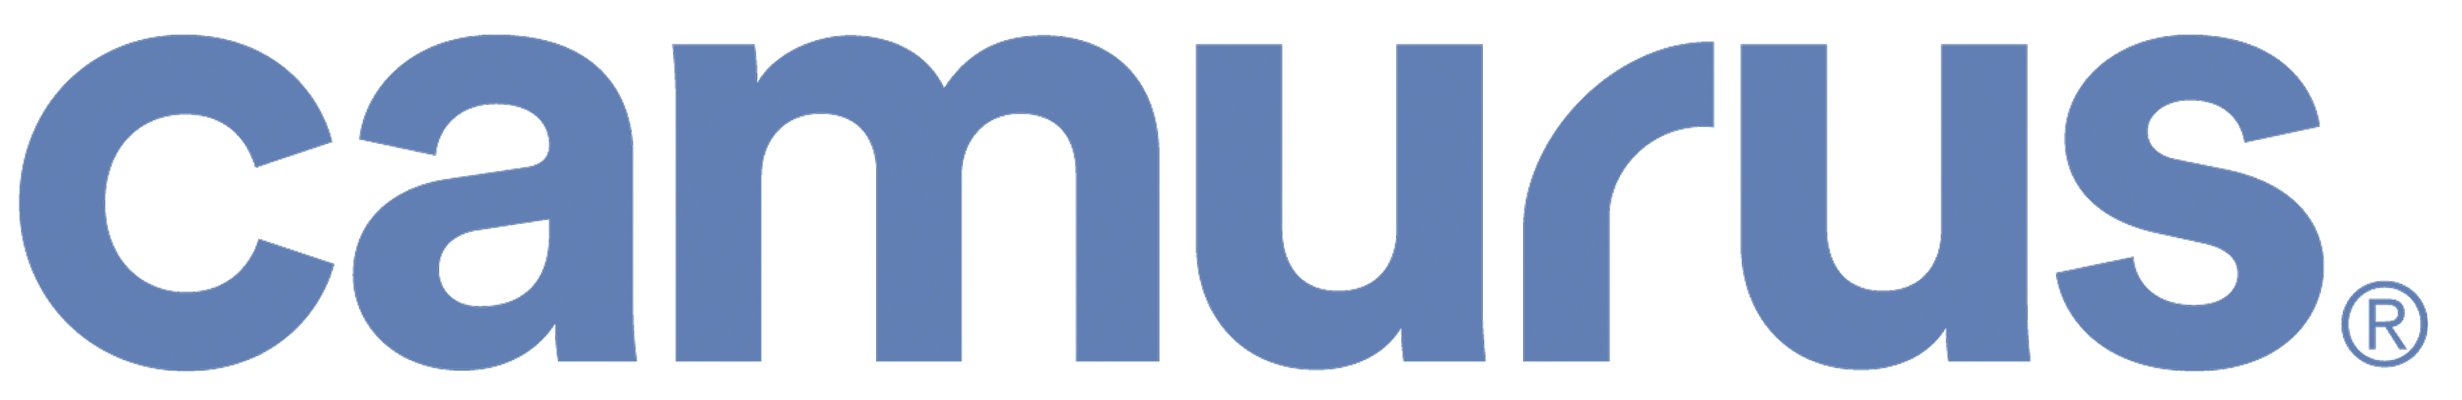 camurus-logo.jpg